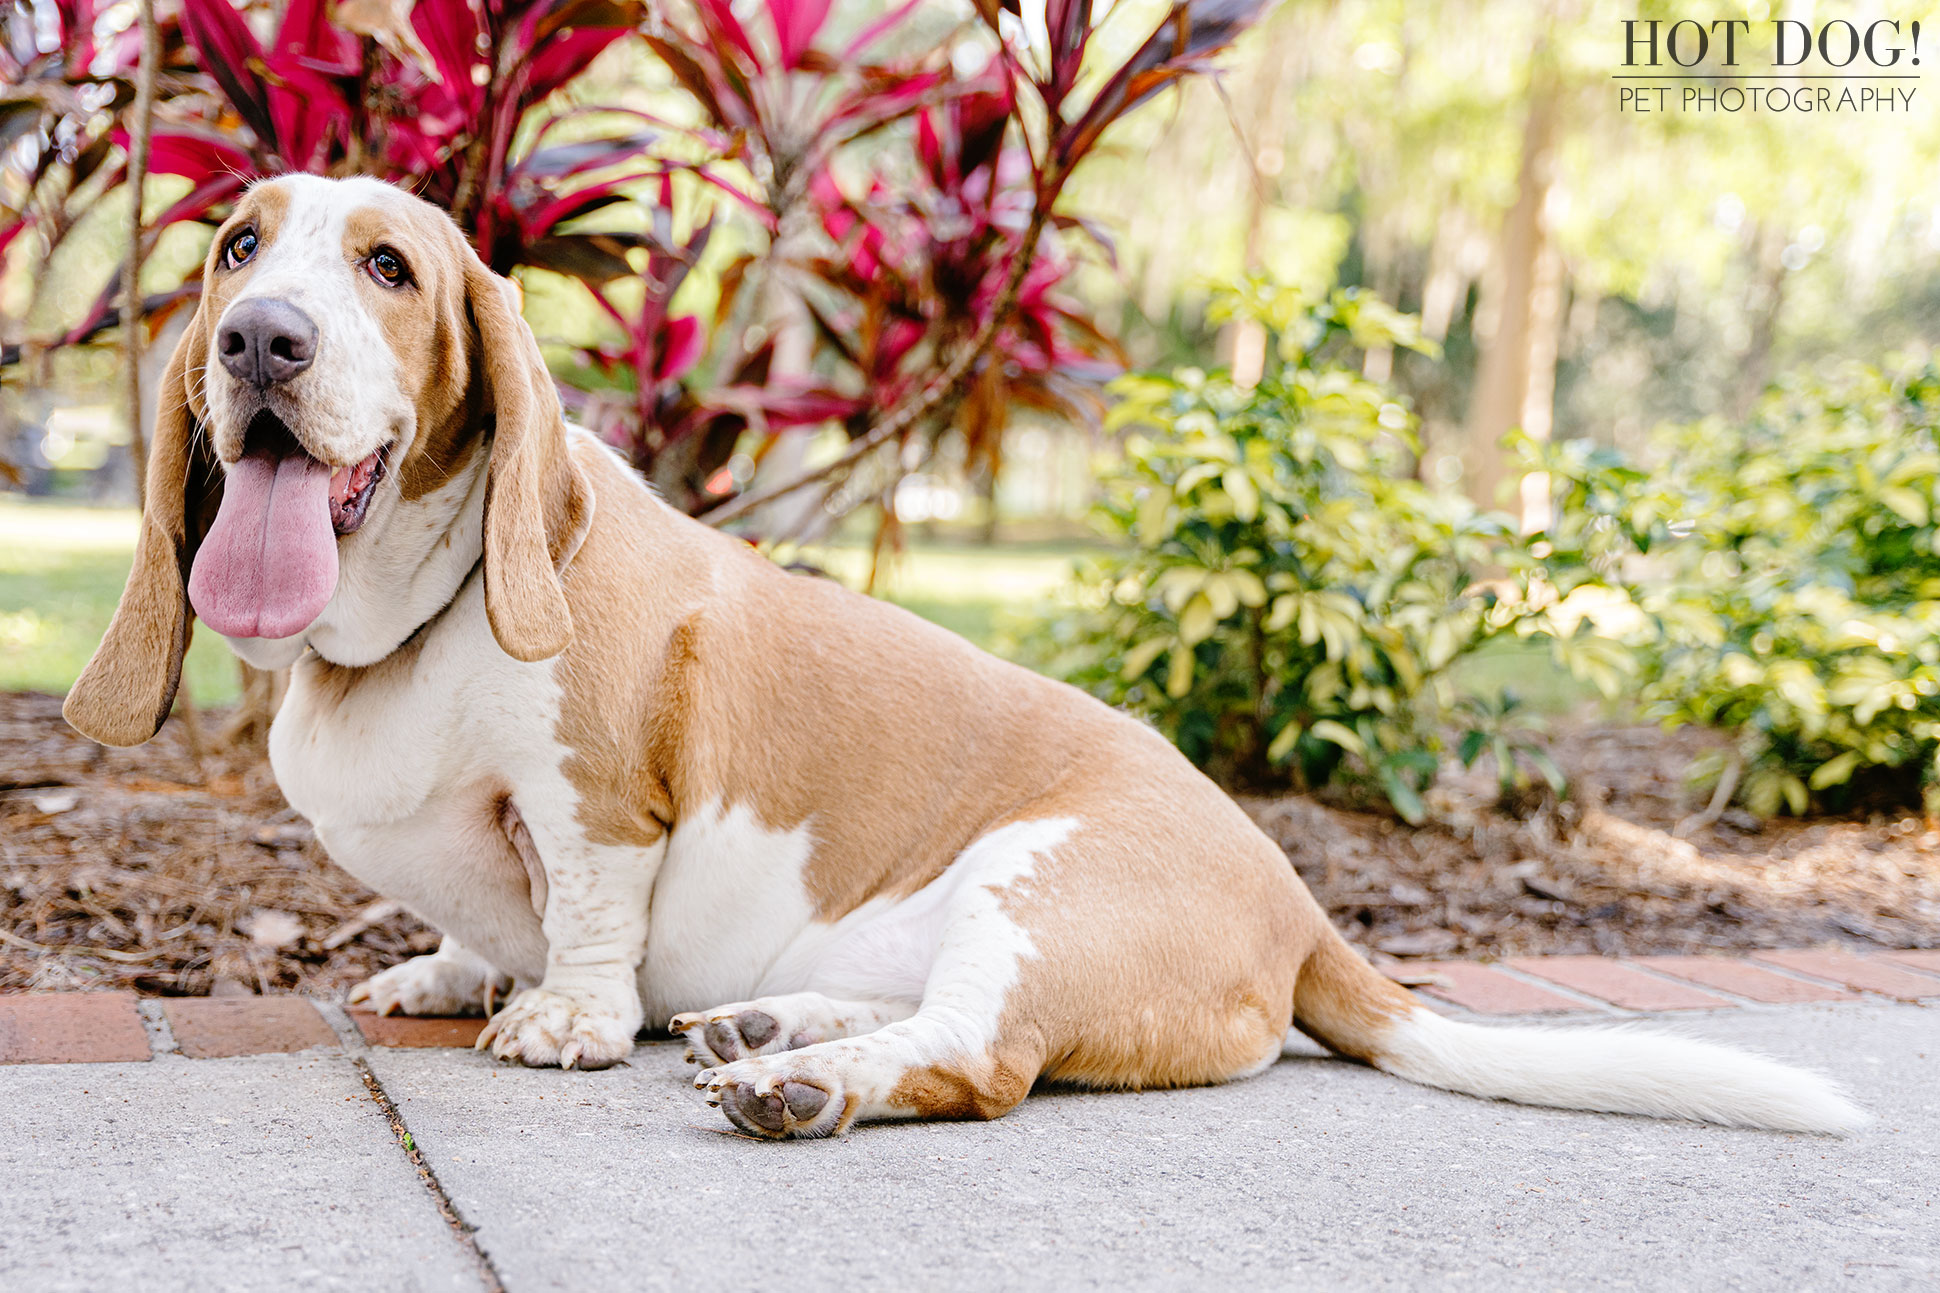 Tom and Erika Pitera of Hot Dog! Pet Photography capture the love of basset hounds in Orlando, Florida.